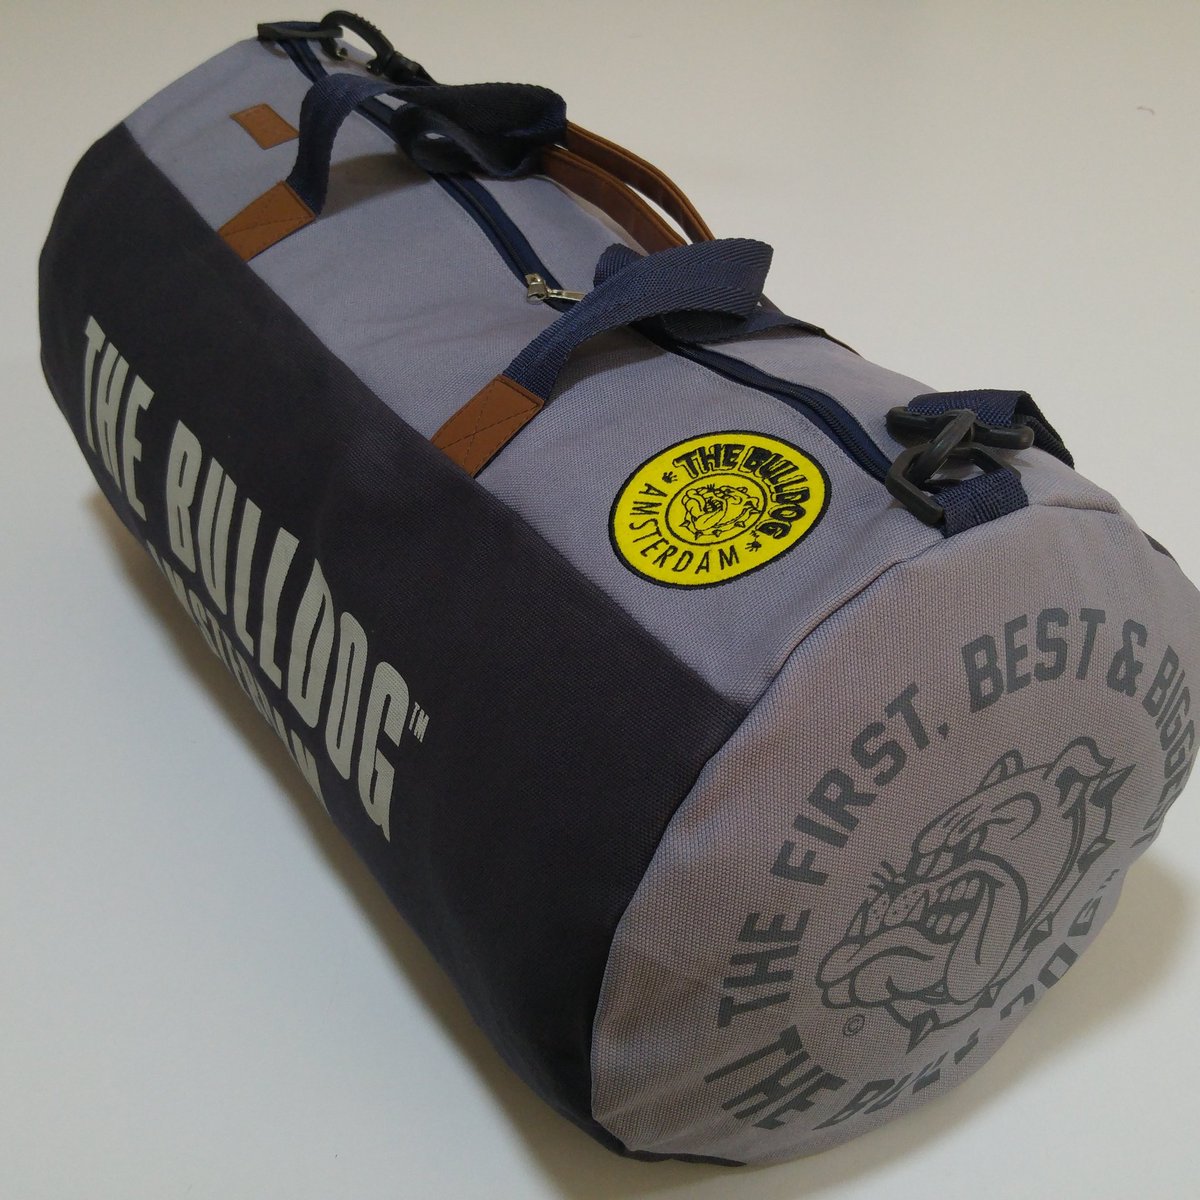 Our product Bulldog sports bag for Nederland
#promotionbag 
#sportsbag 
#bulldogamsterdam